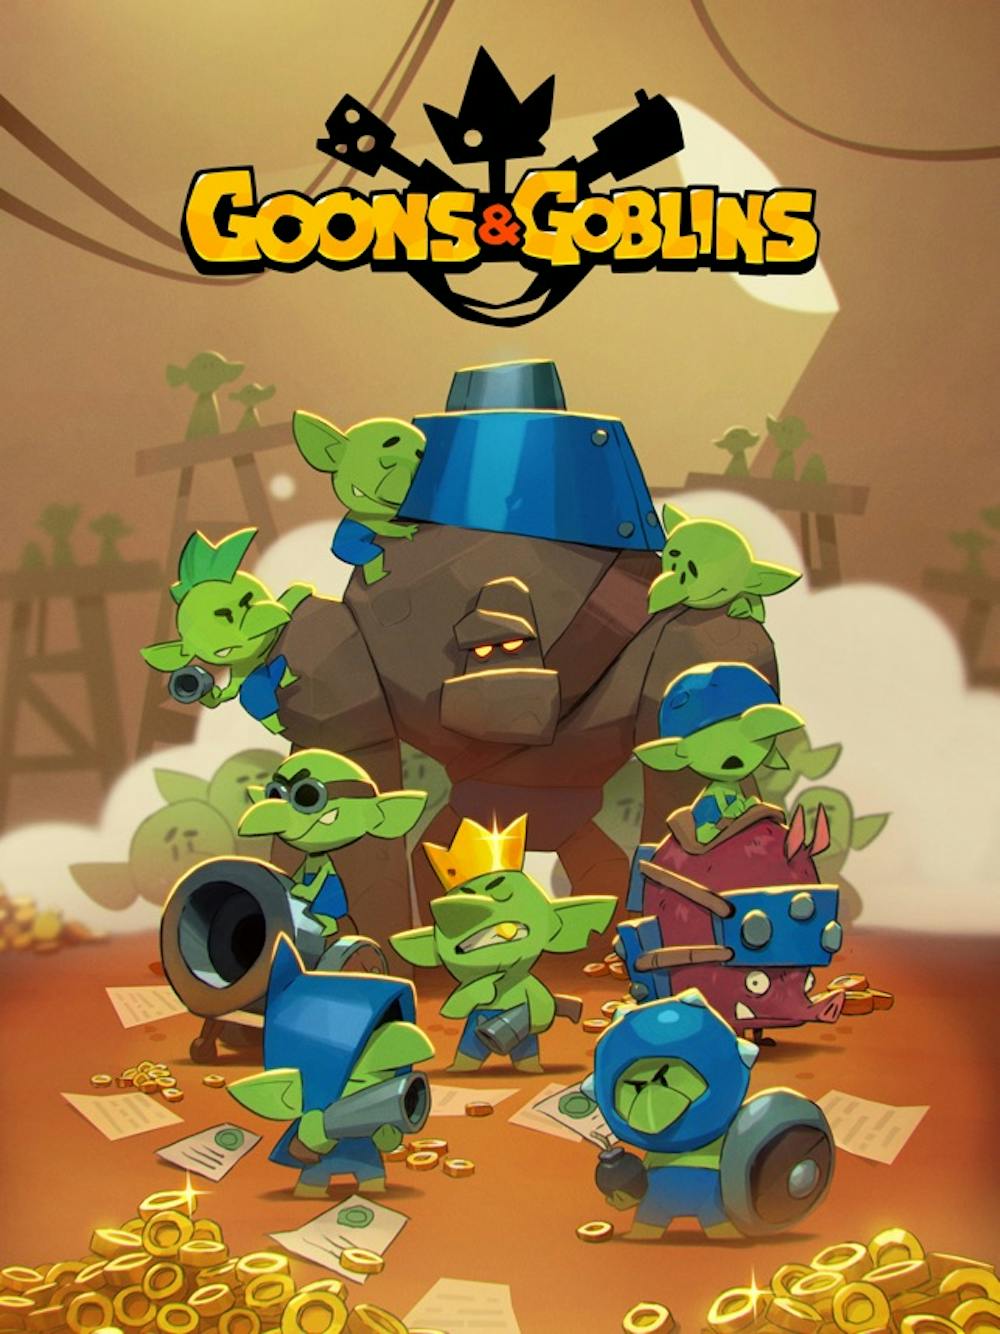 Goons & Goblins